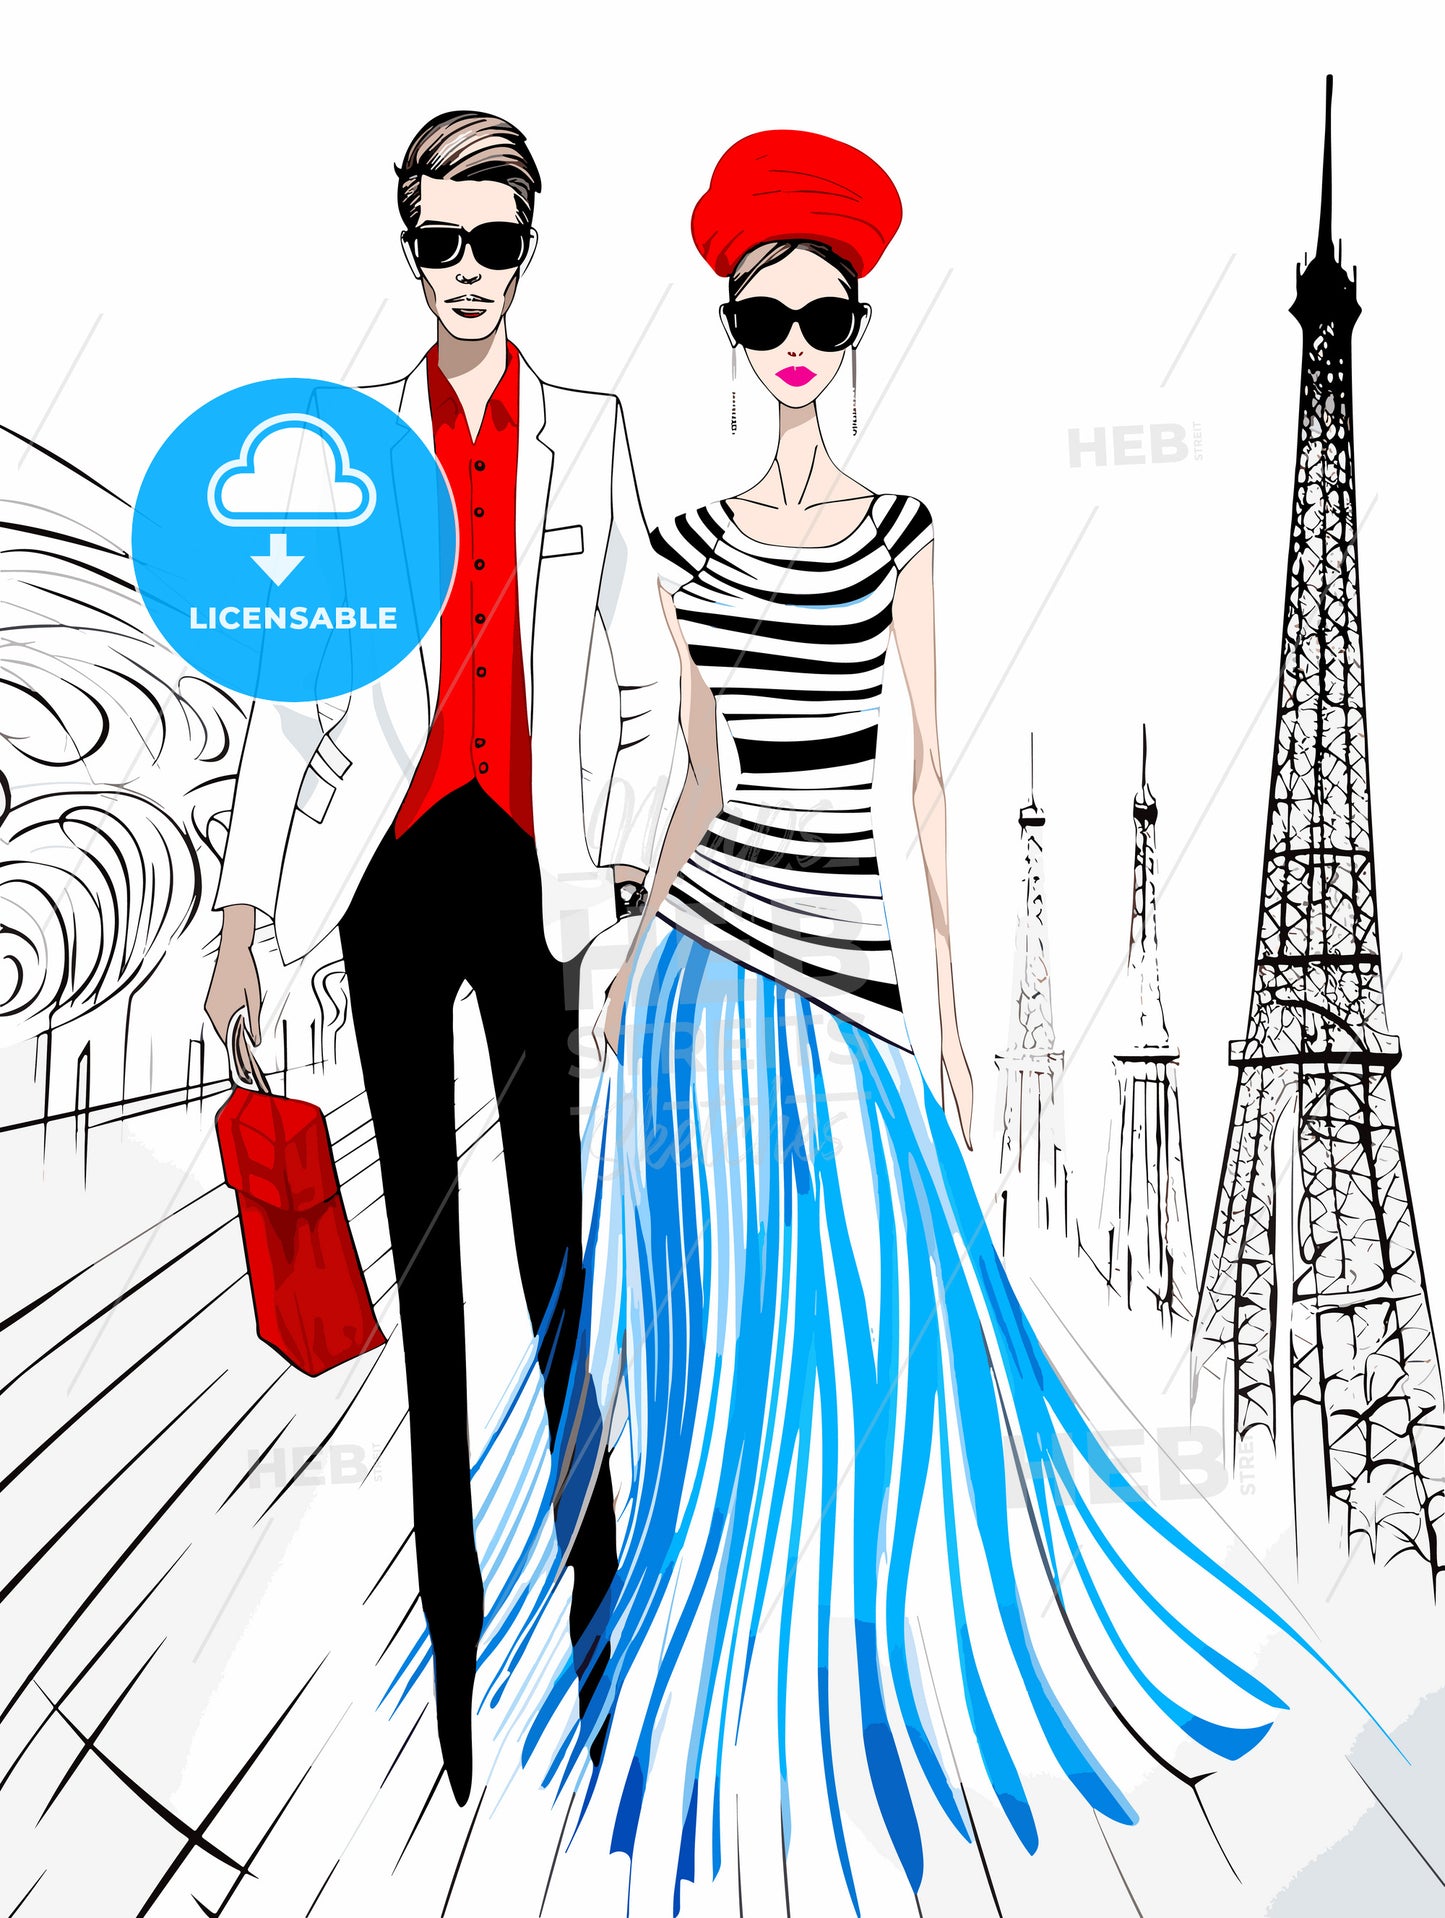 Fashion illustration of Couple in Paris